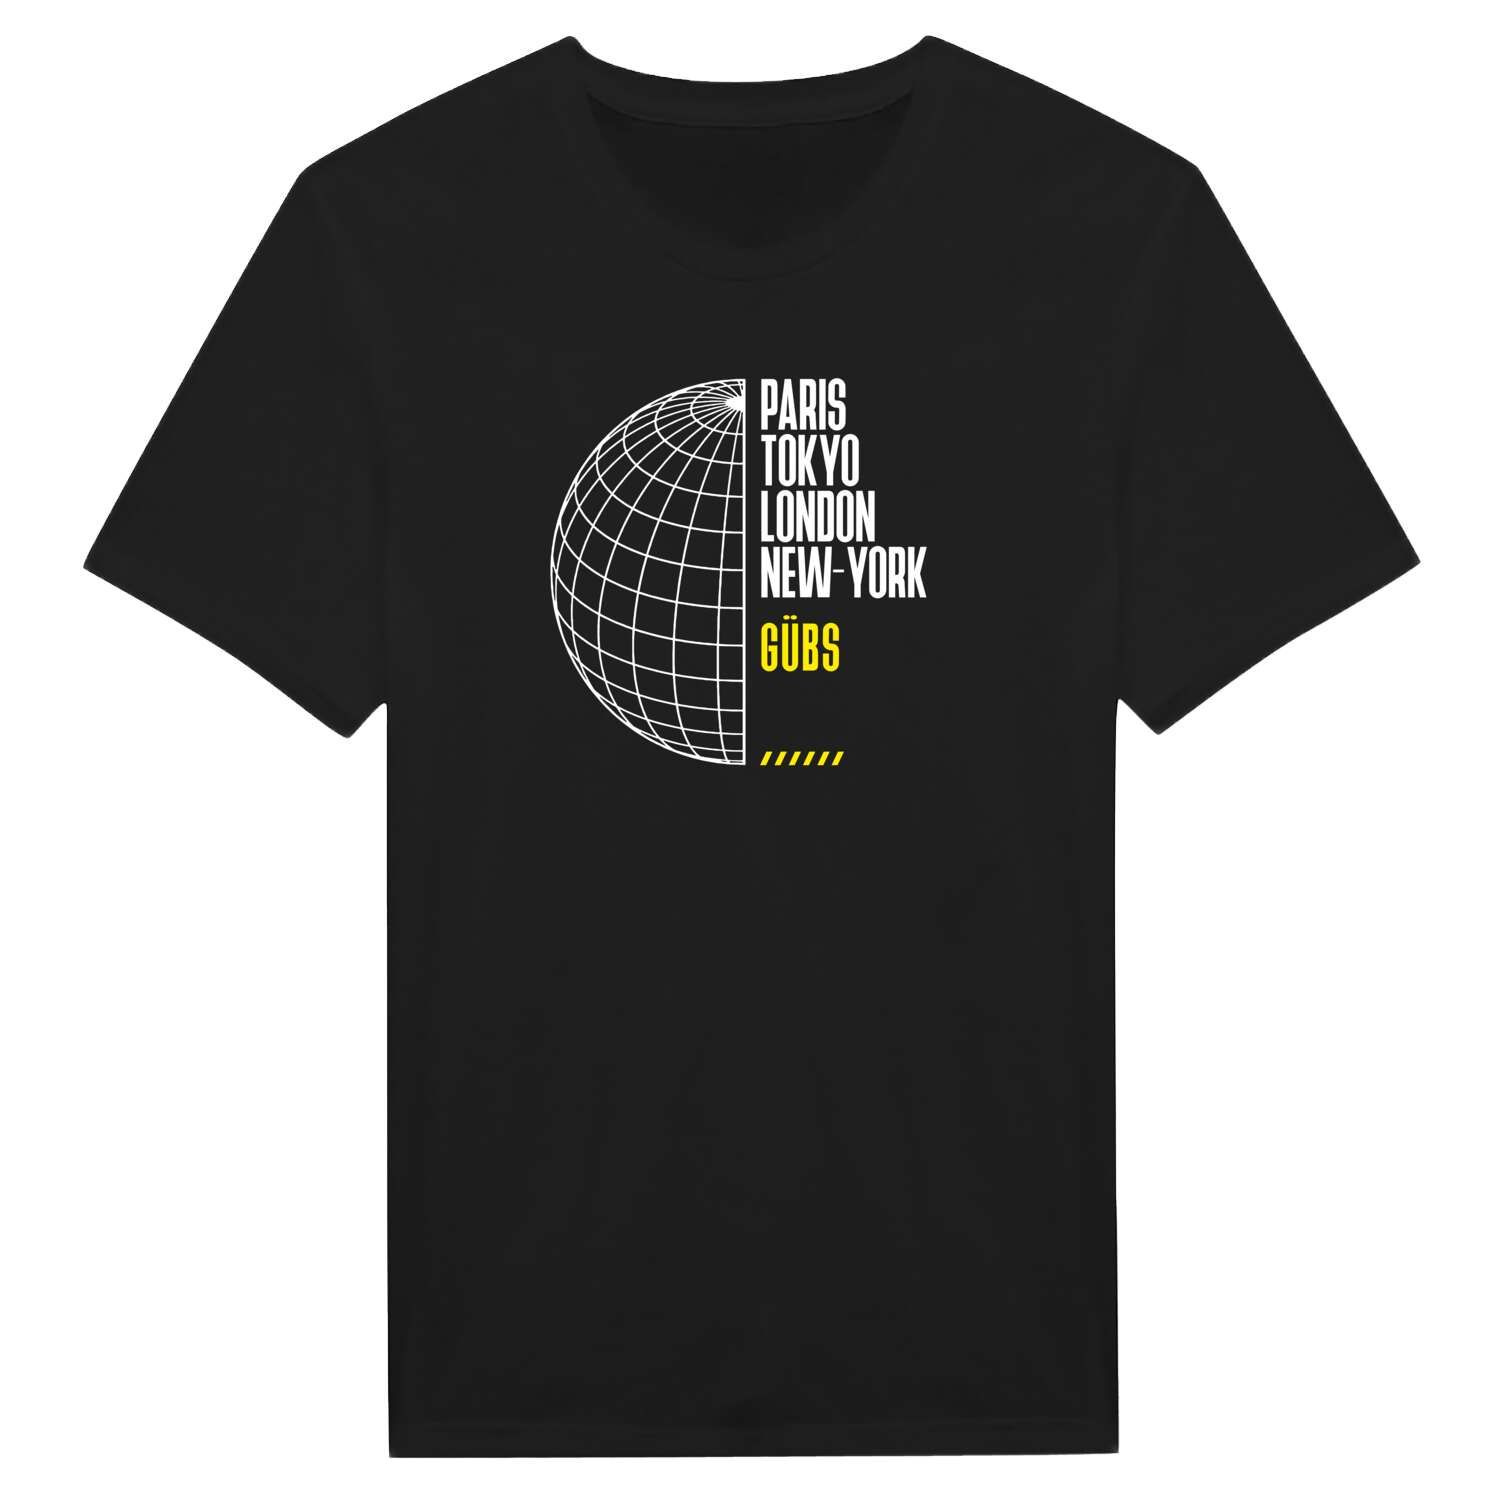 Gübs T-Shirt »Paris Tokyo London«